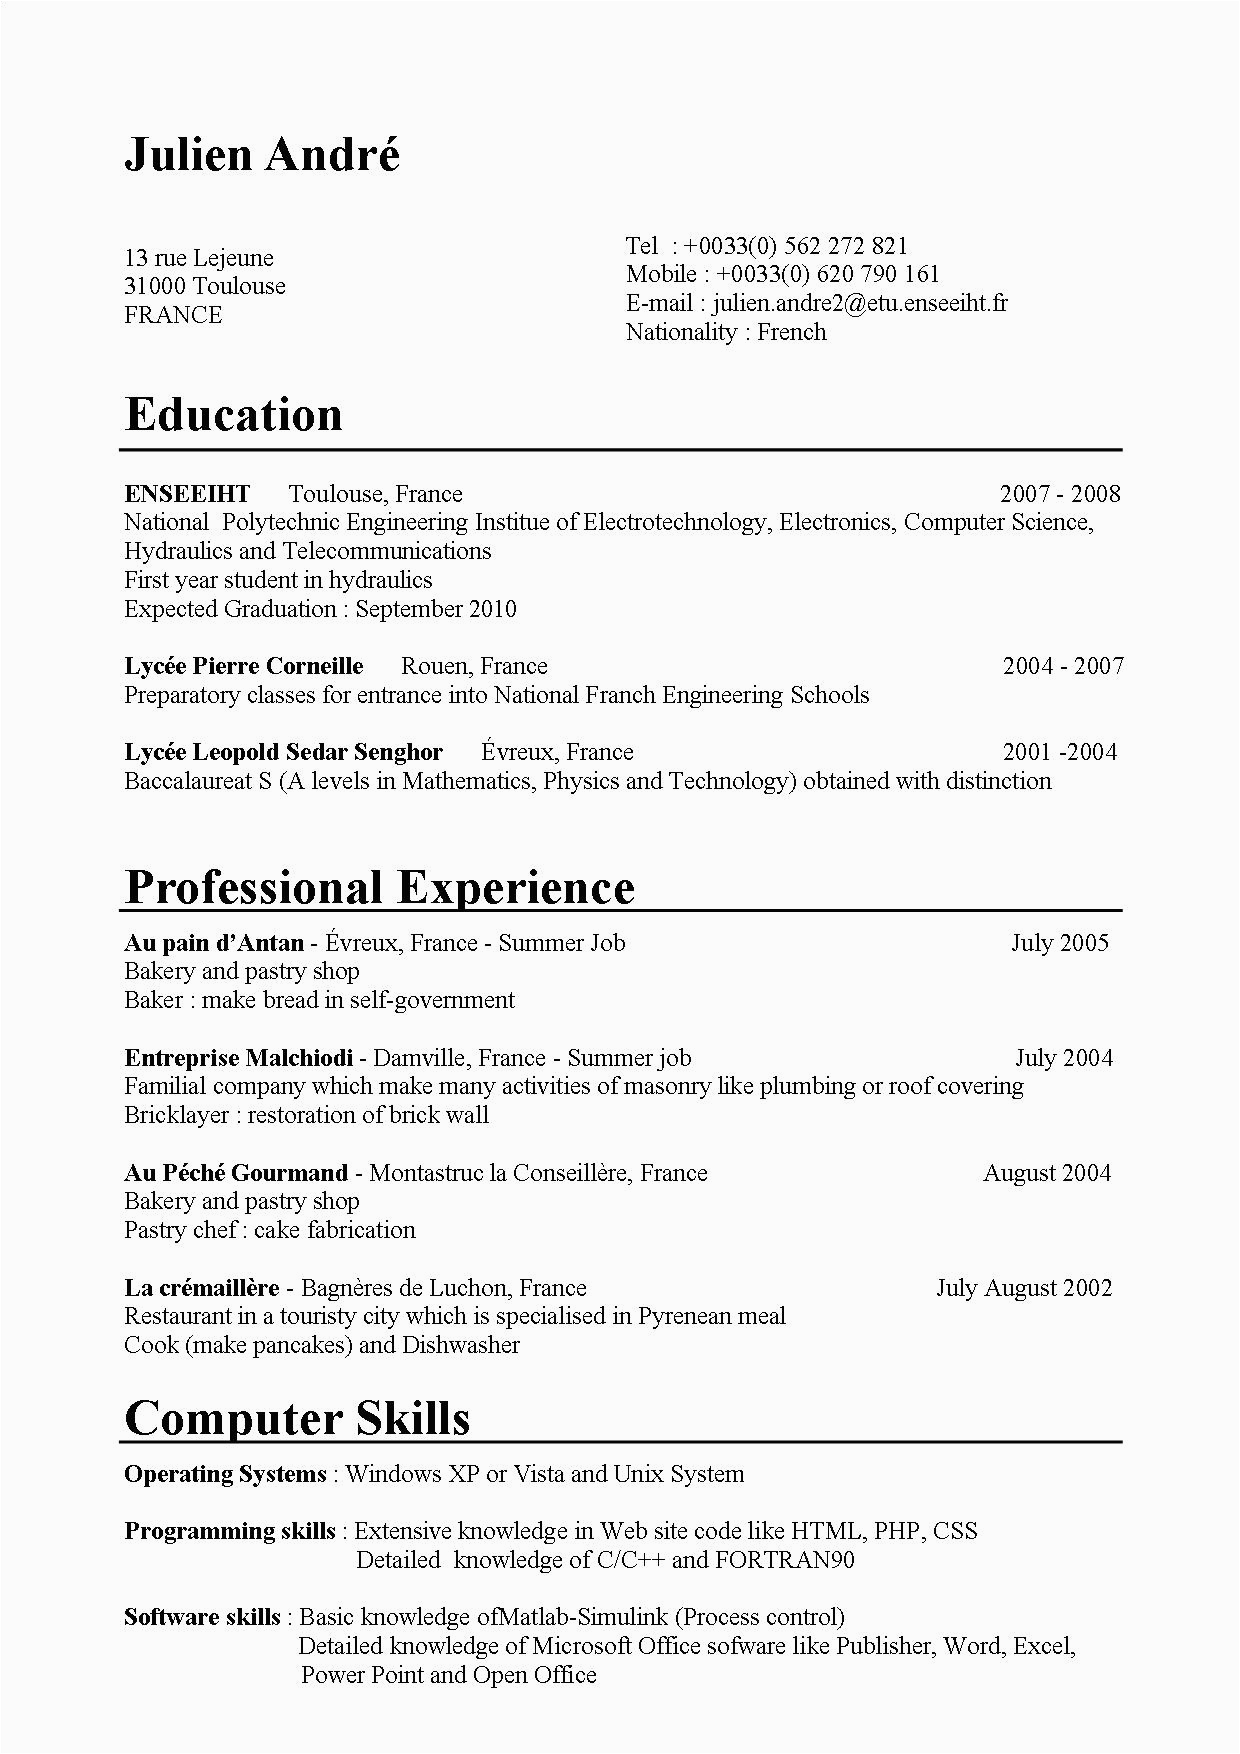 Resume for Tim Hortons Job Sample How to Write A Resume for Applying at Tim Hortons